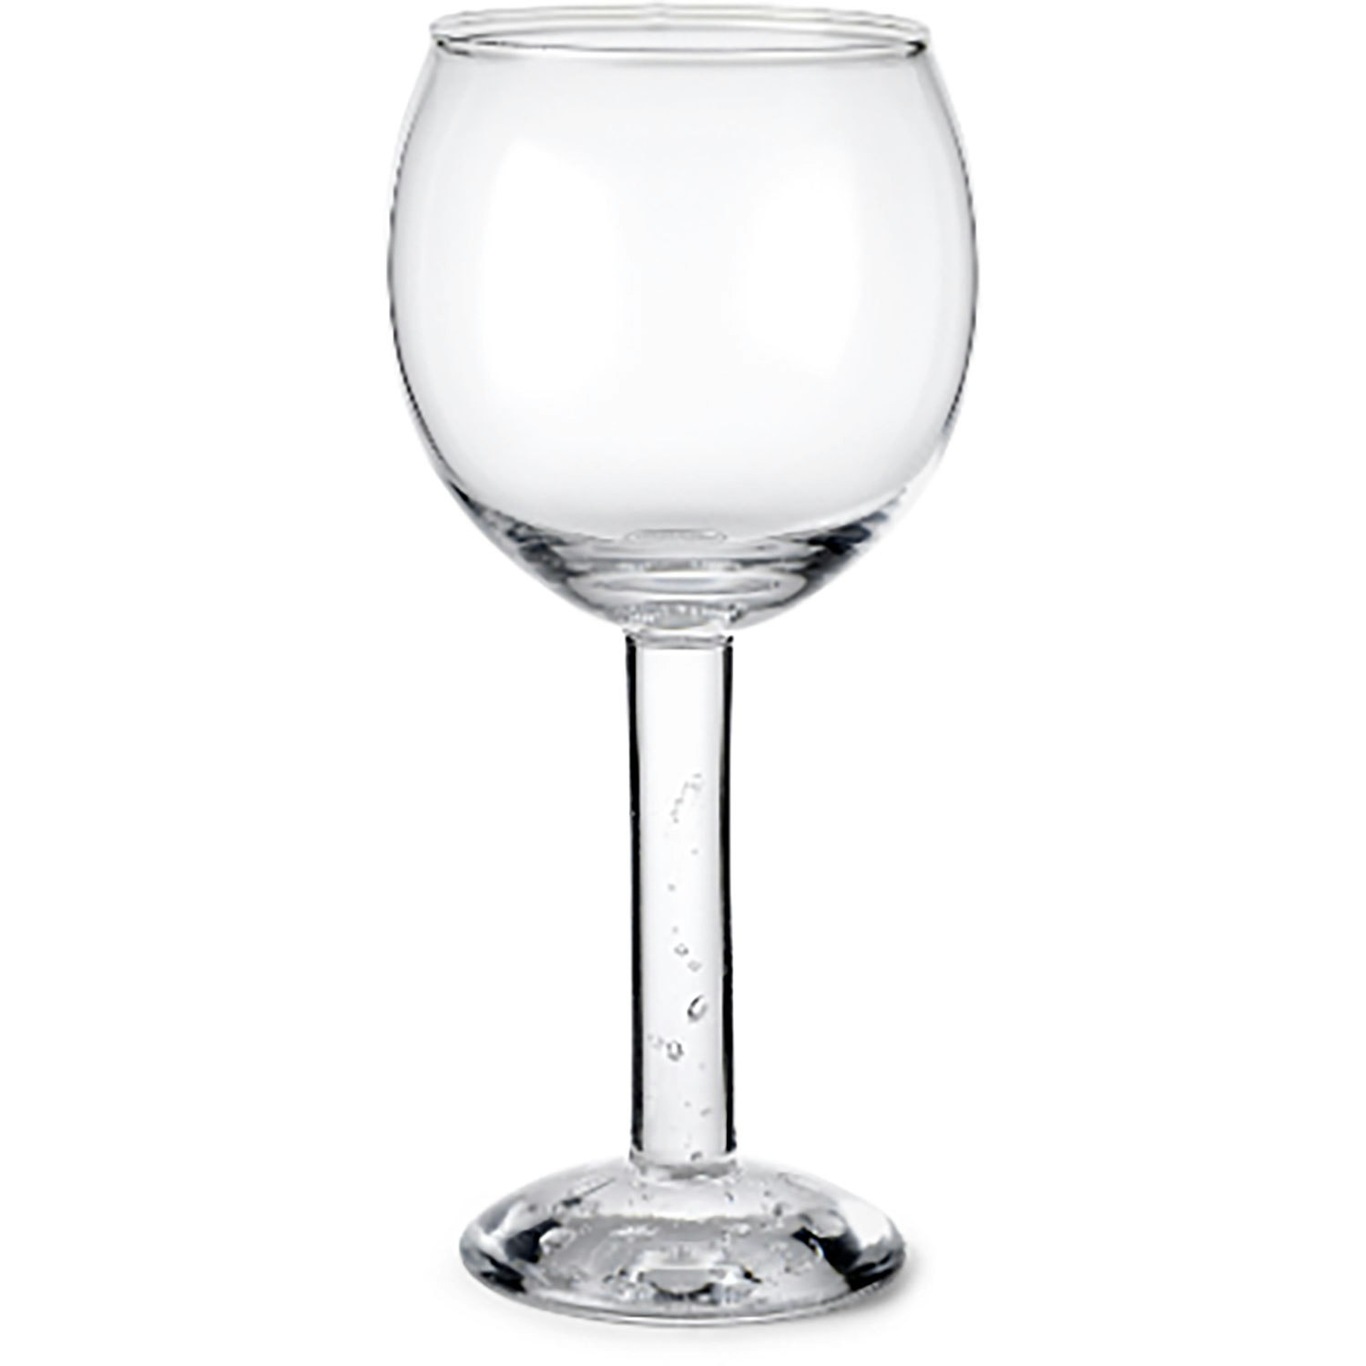 https://royaldesign.com/image/2/louise-roe-bubble-glass-wine-plain-top-0?w=800&quality=80